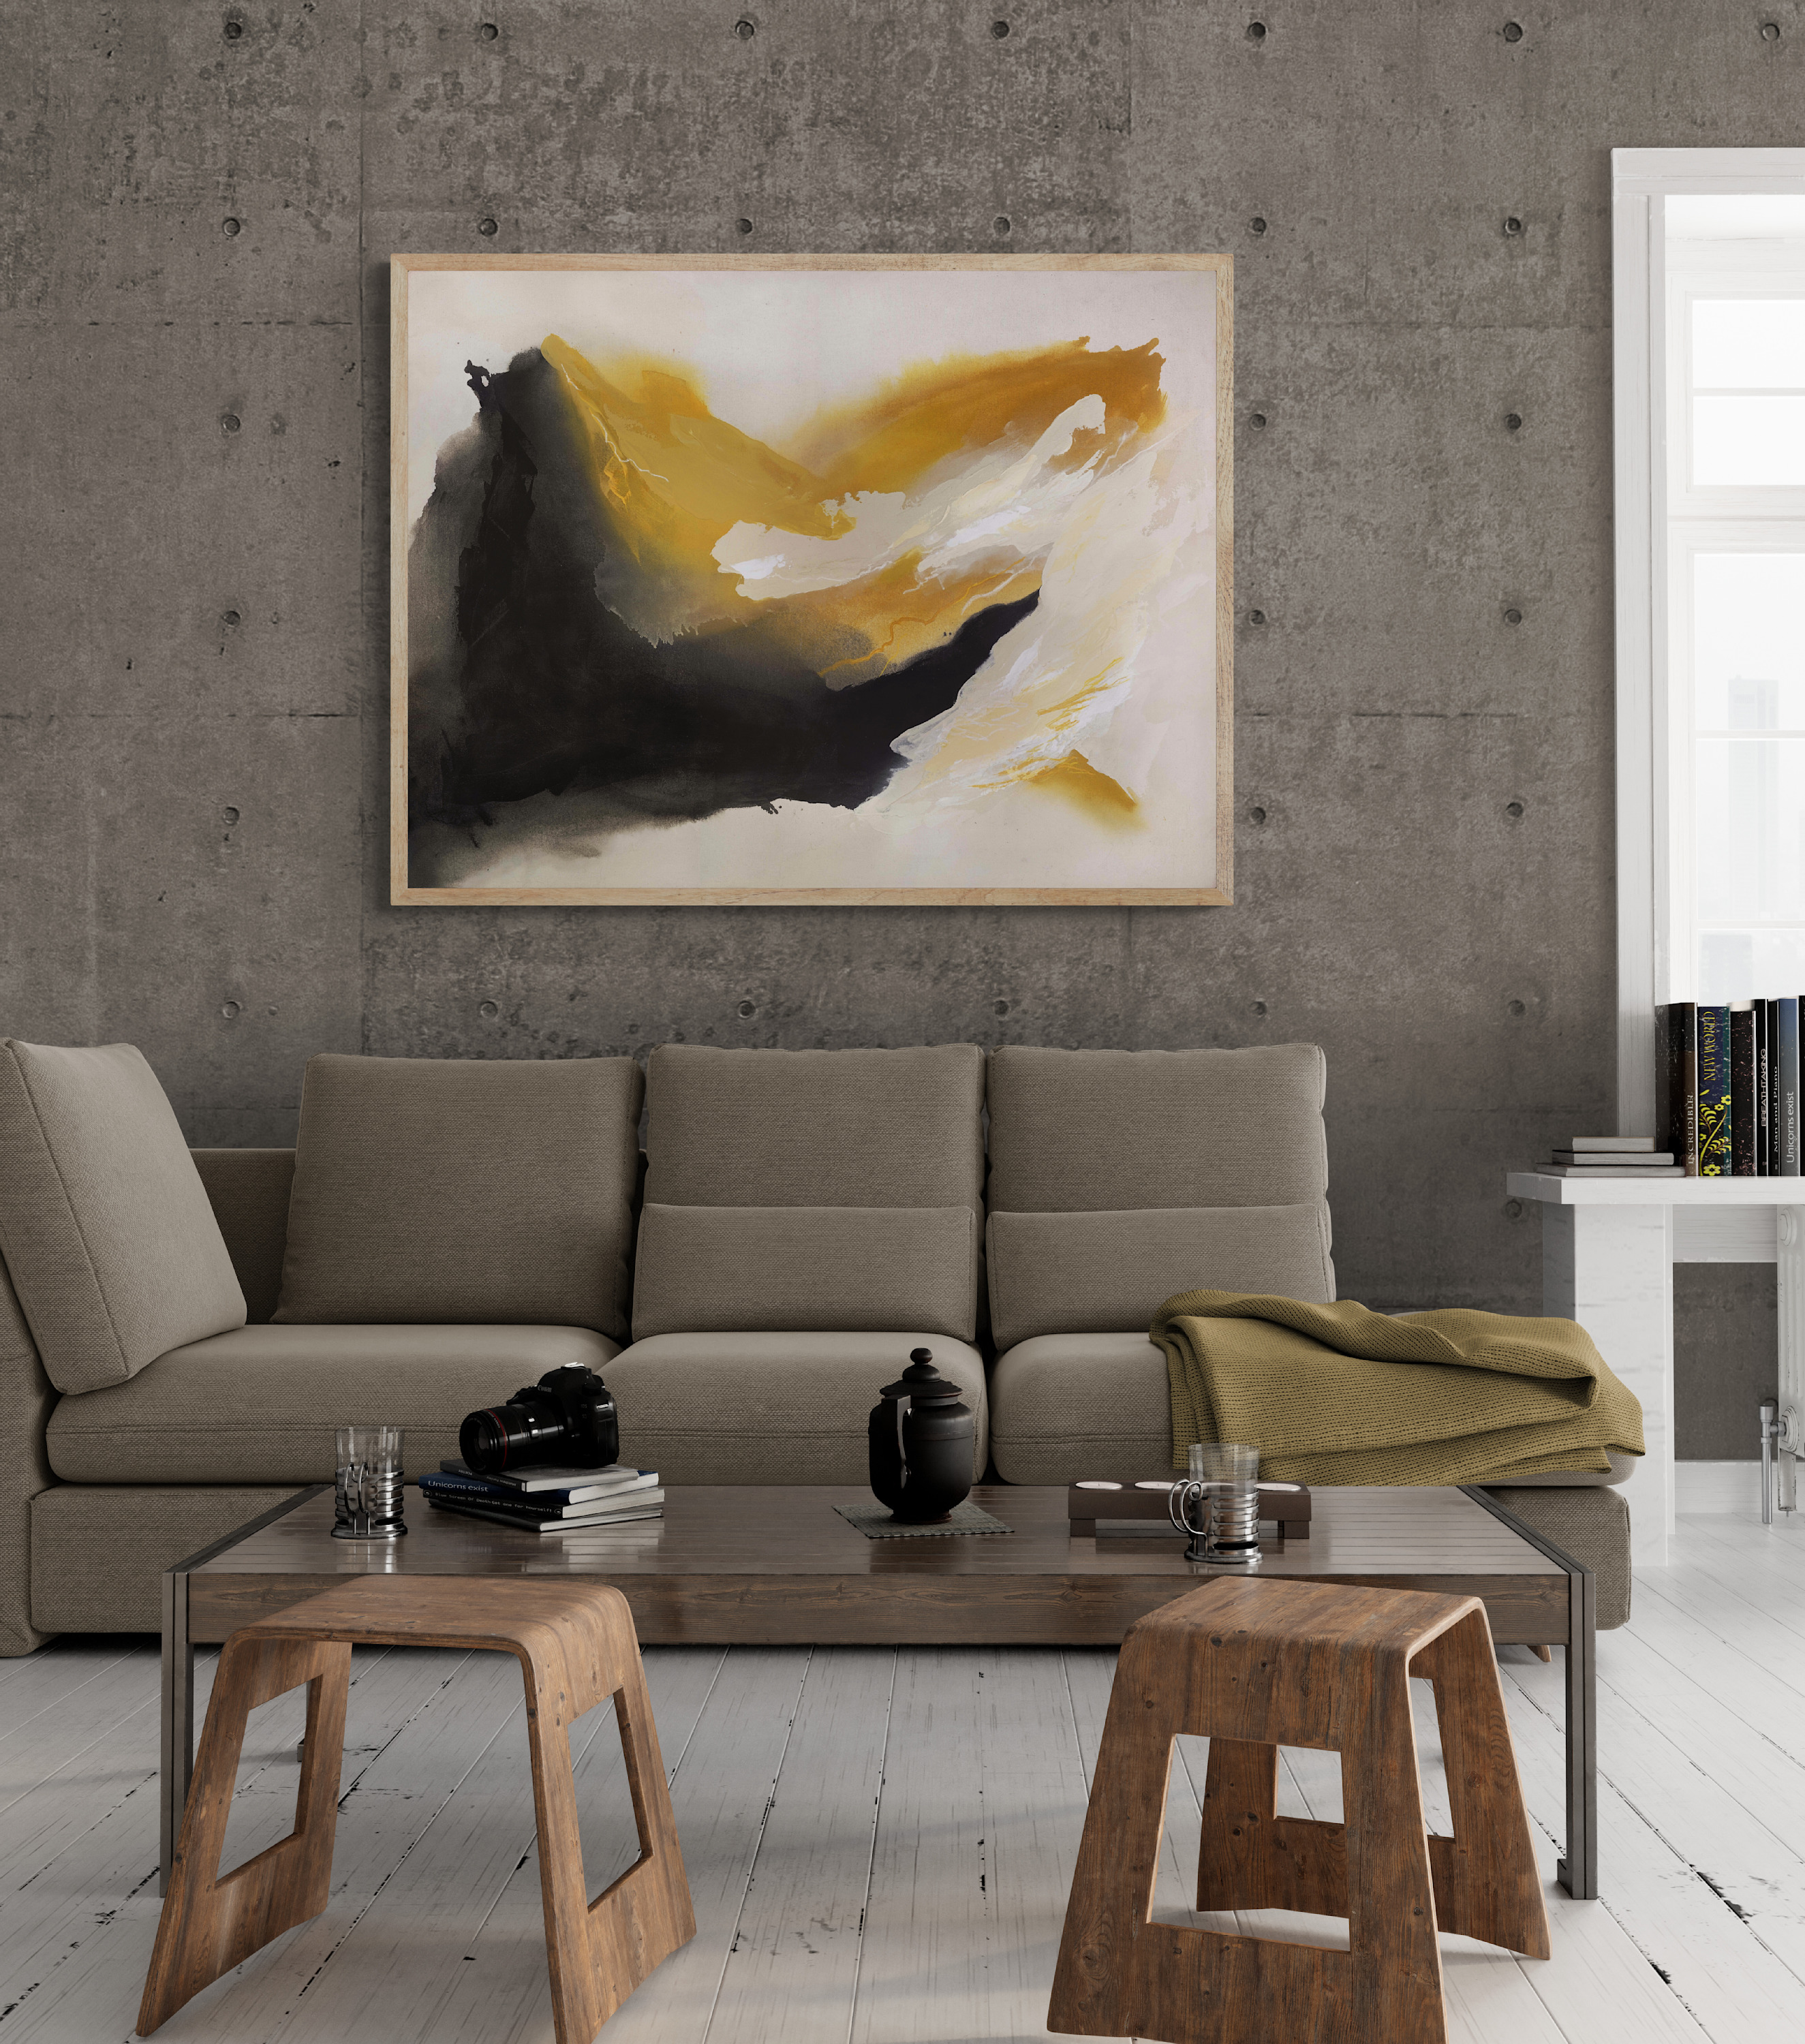 Storm studio living room with modern furnishings qsoelv